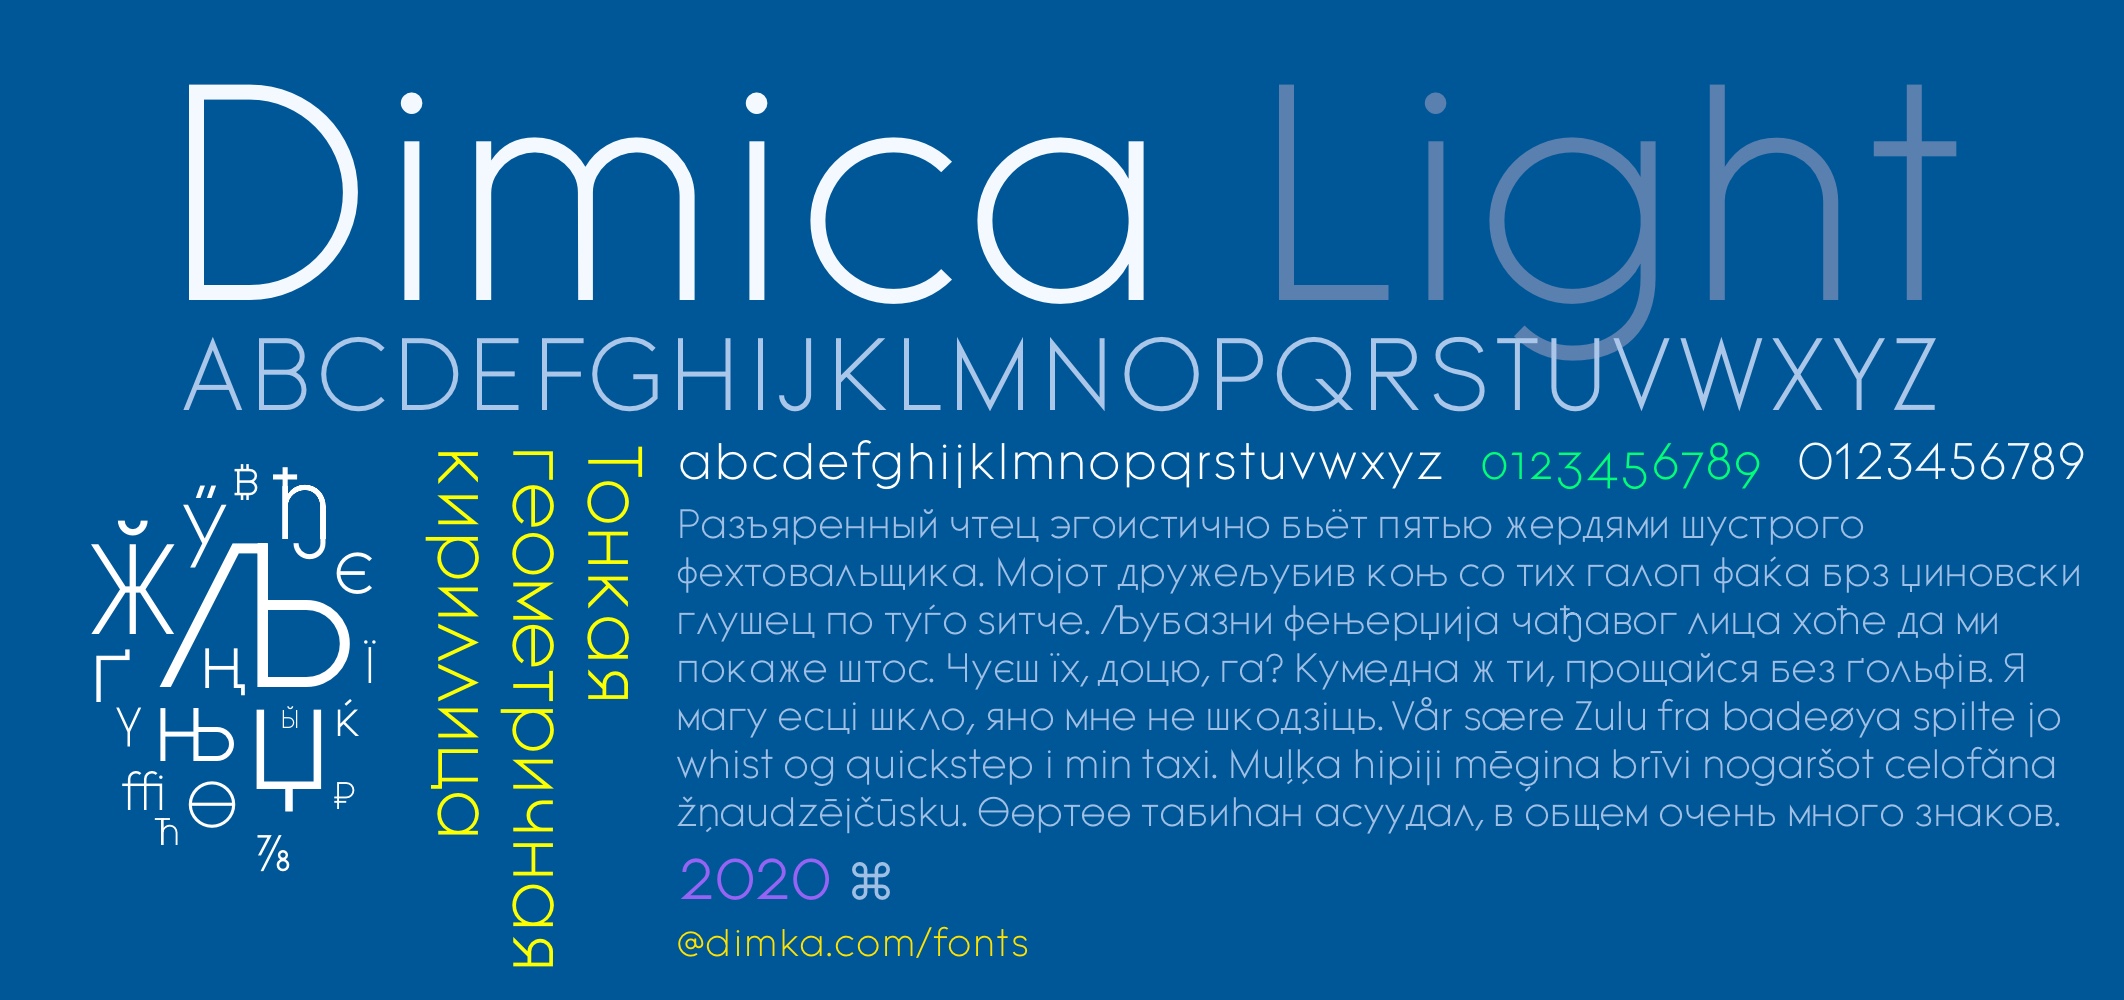 Dimica Light Font by Dimka